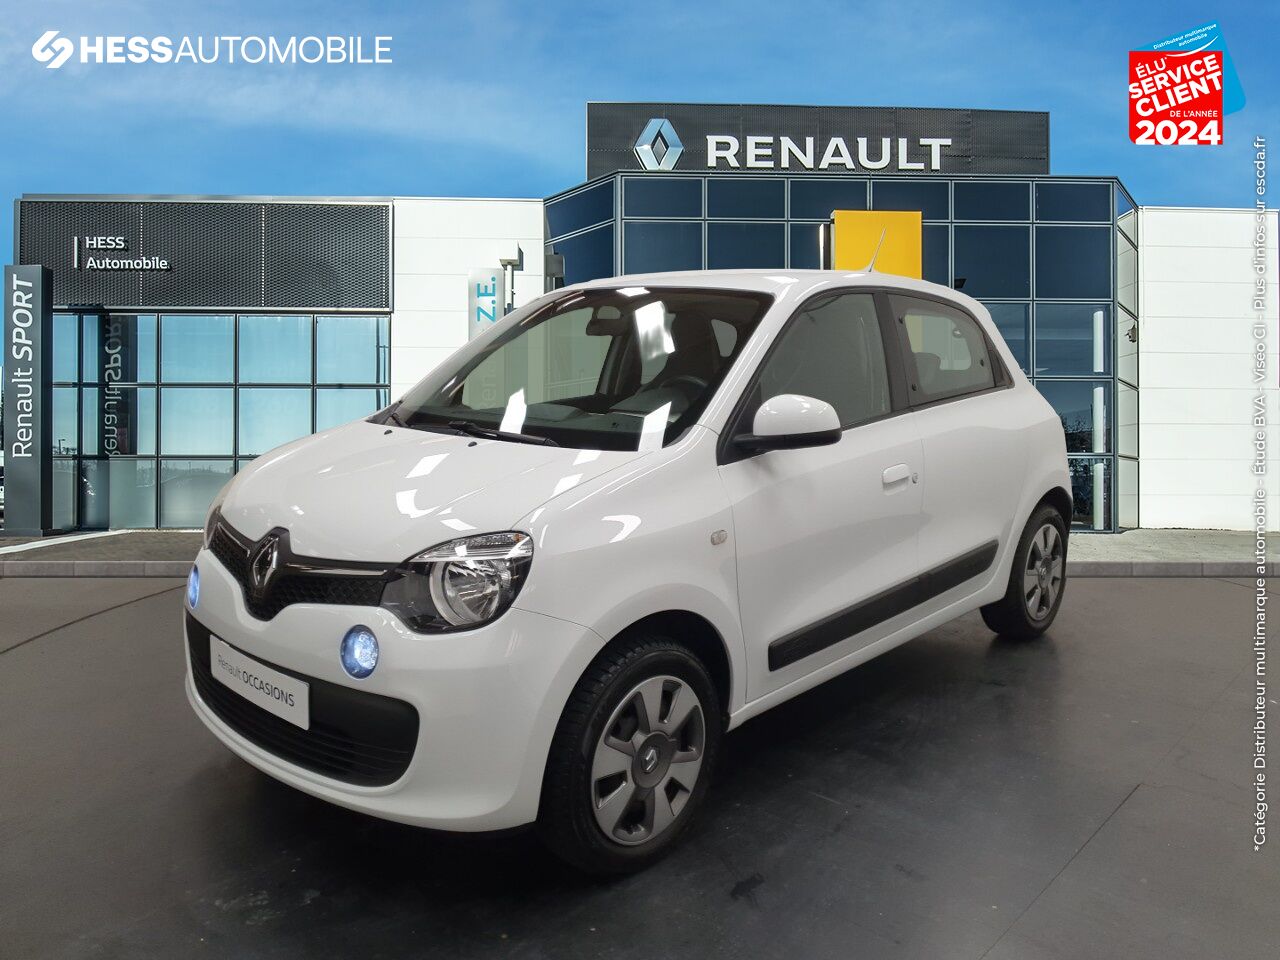 chez Renault Saint-Avold